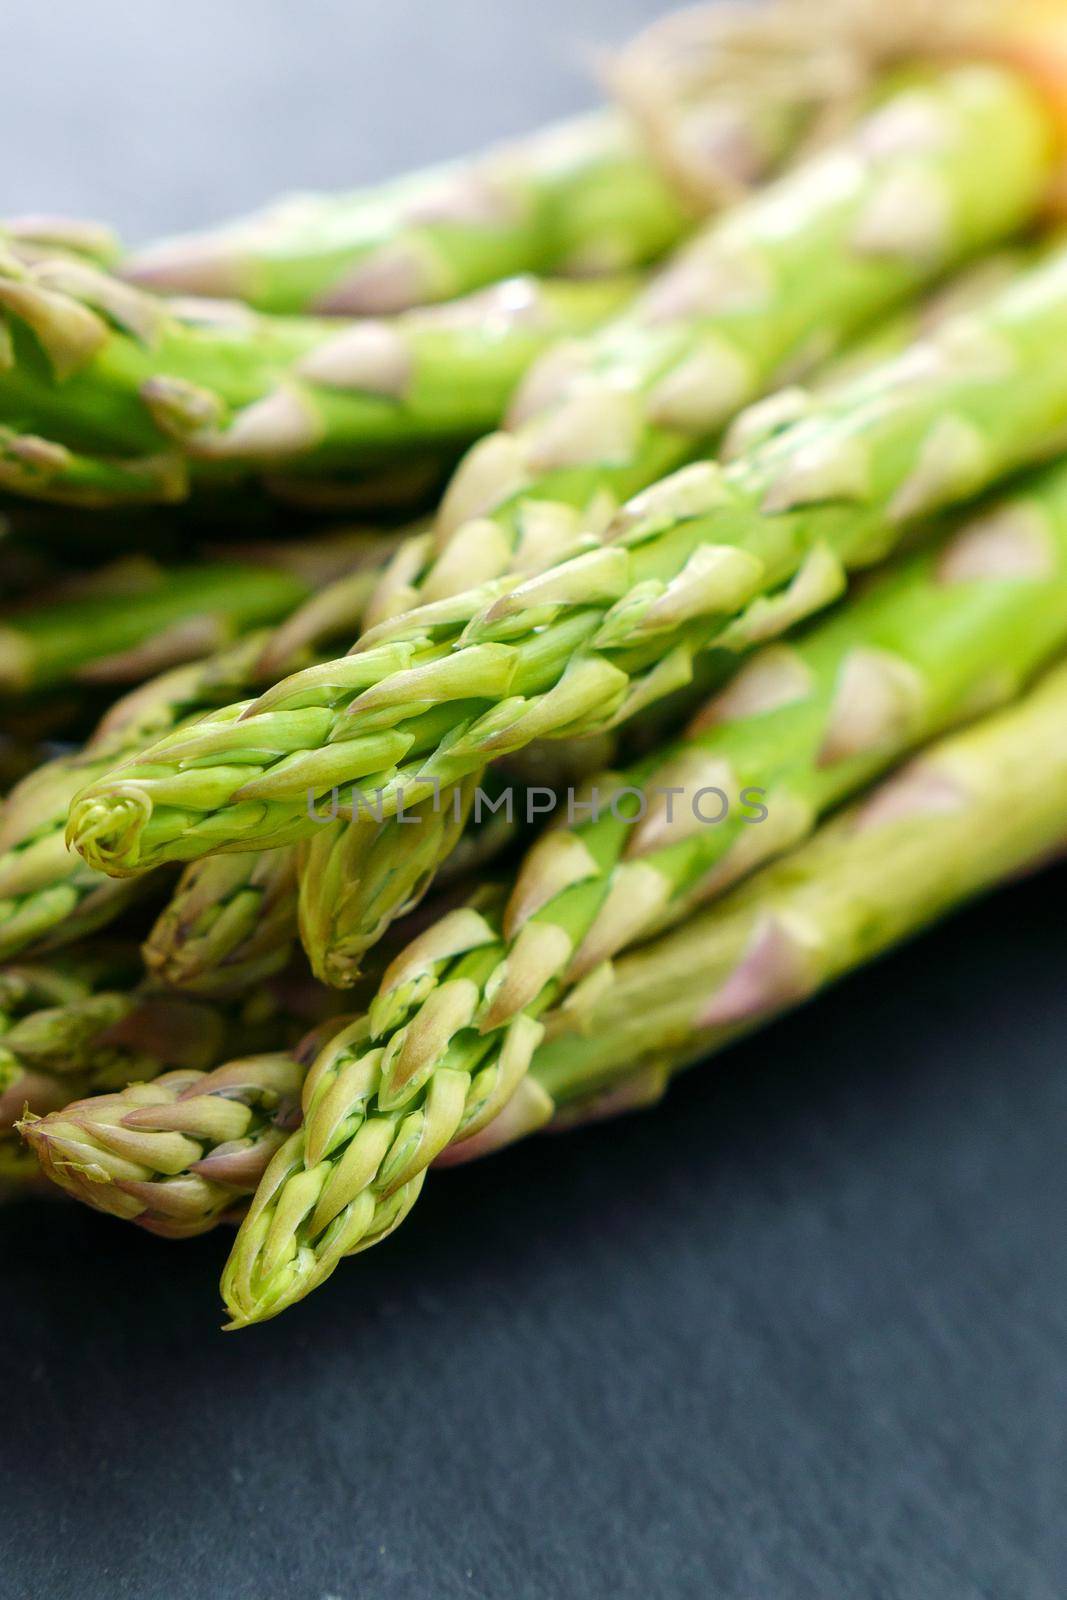 Garden asparagus is a perennial flowering plant of the genus Asparagus. Selective focus